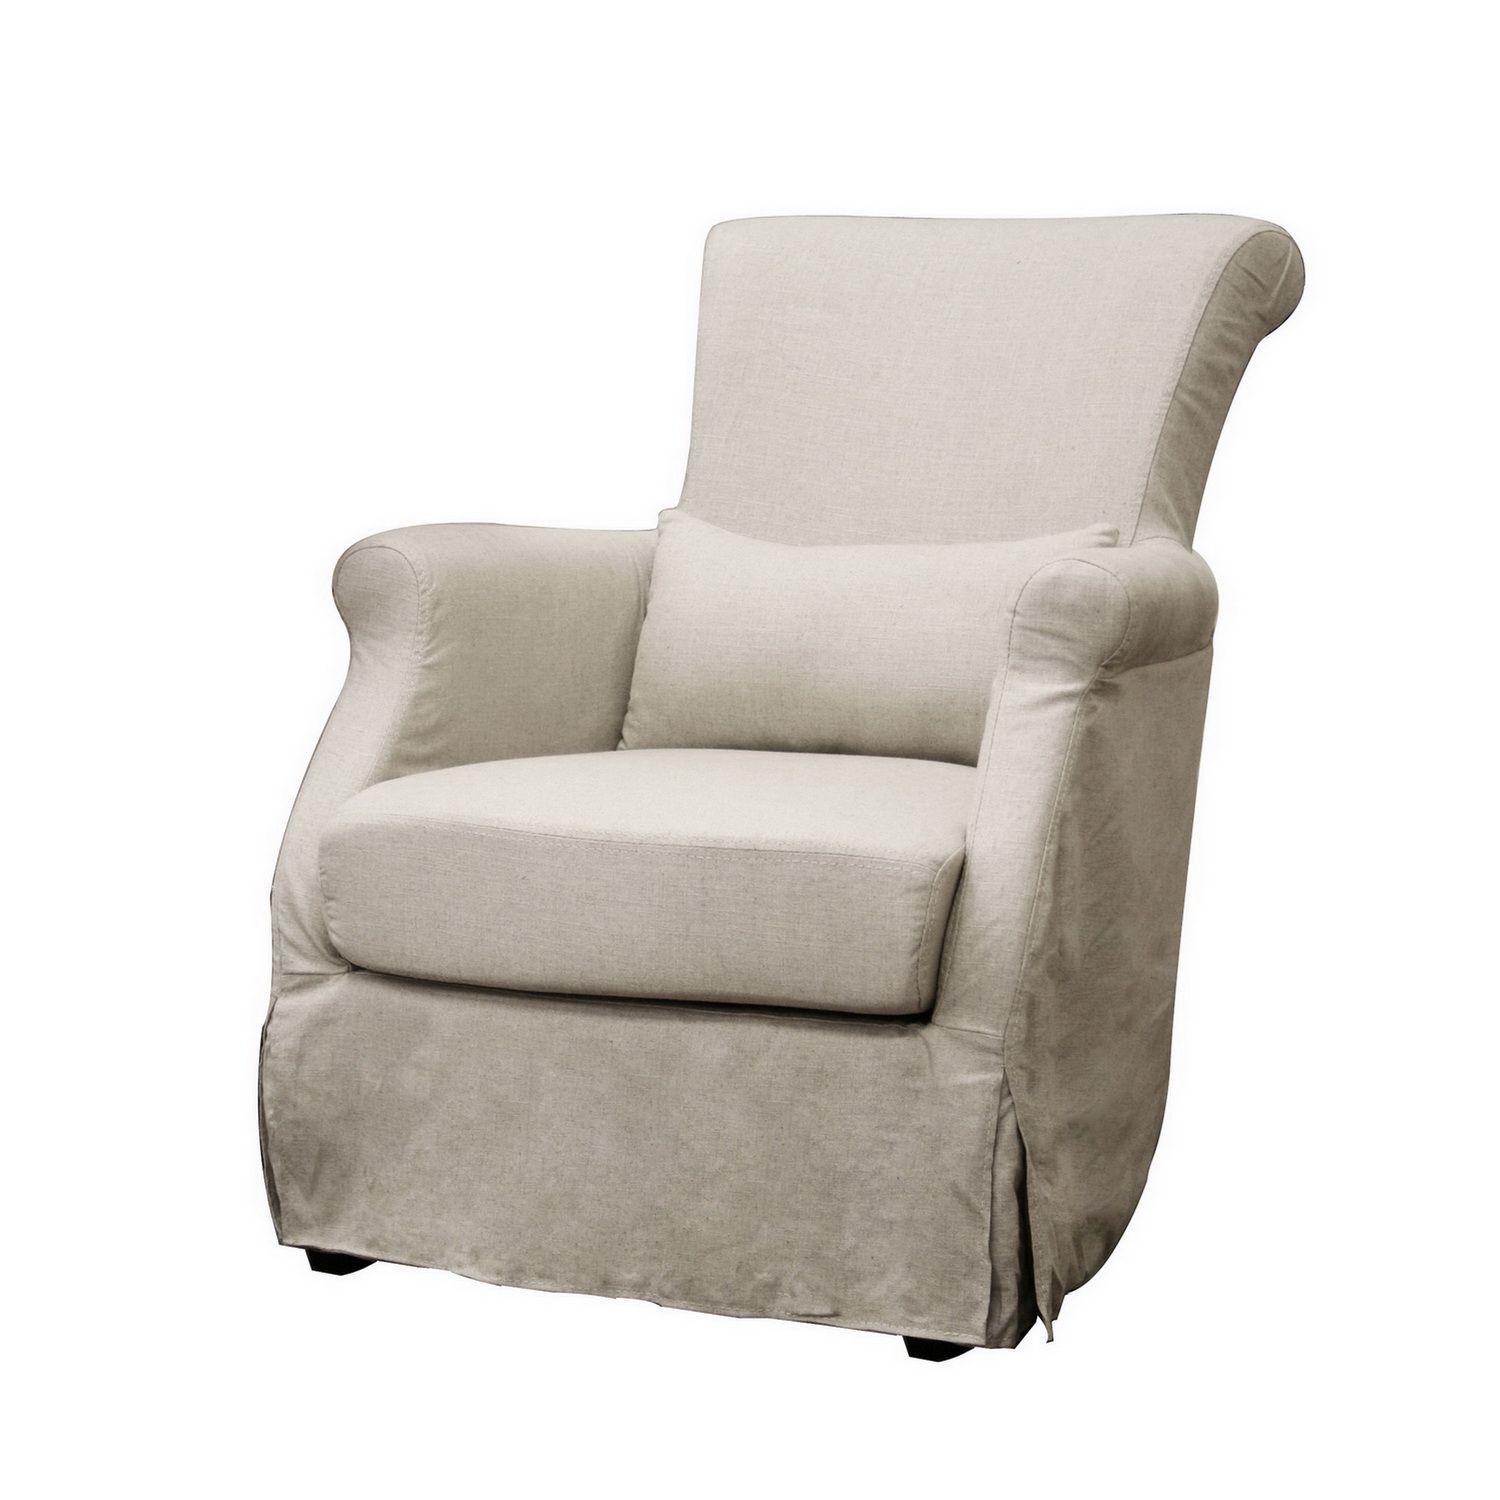 UPC 847321000056 product image for Baxton Carradine Beige Linen Slipcover Modern Club Chair | upcitemdb.com